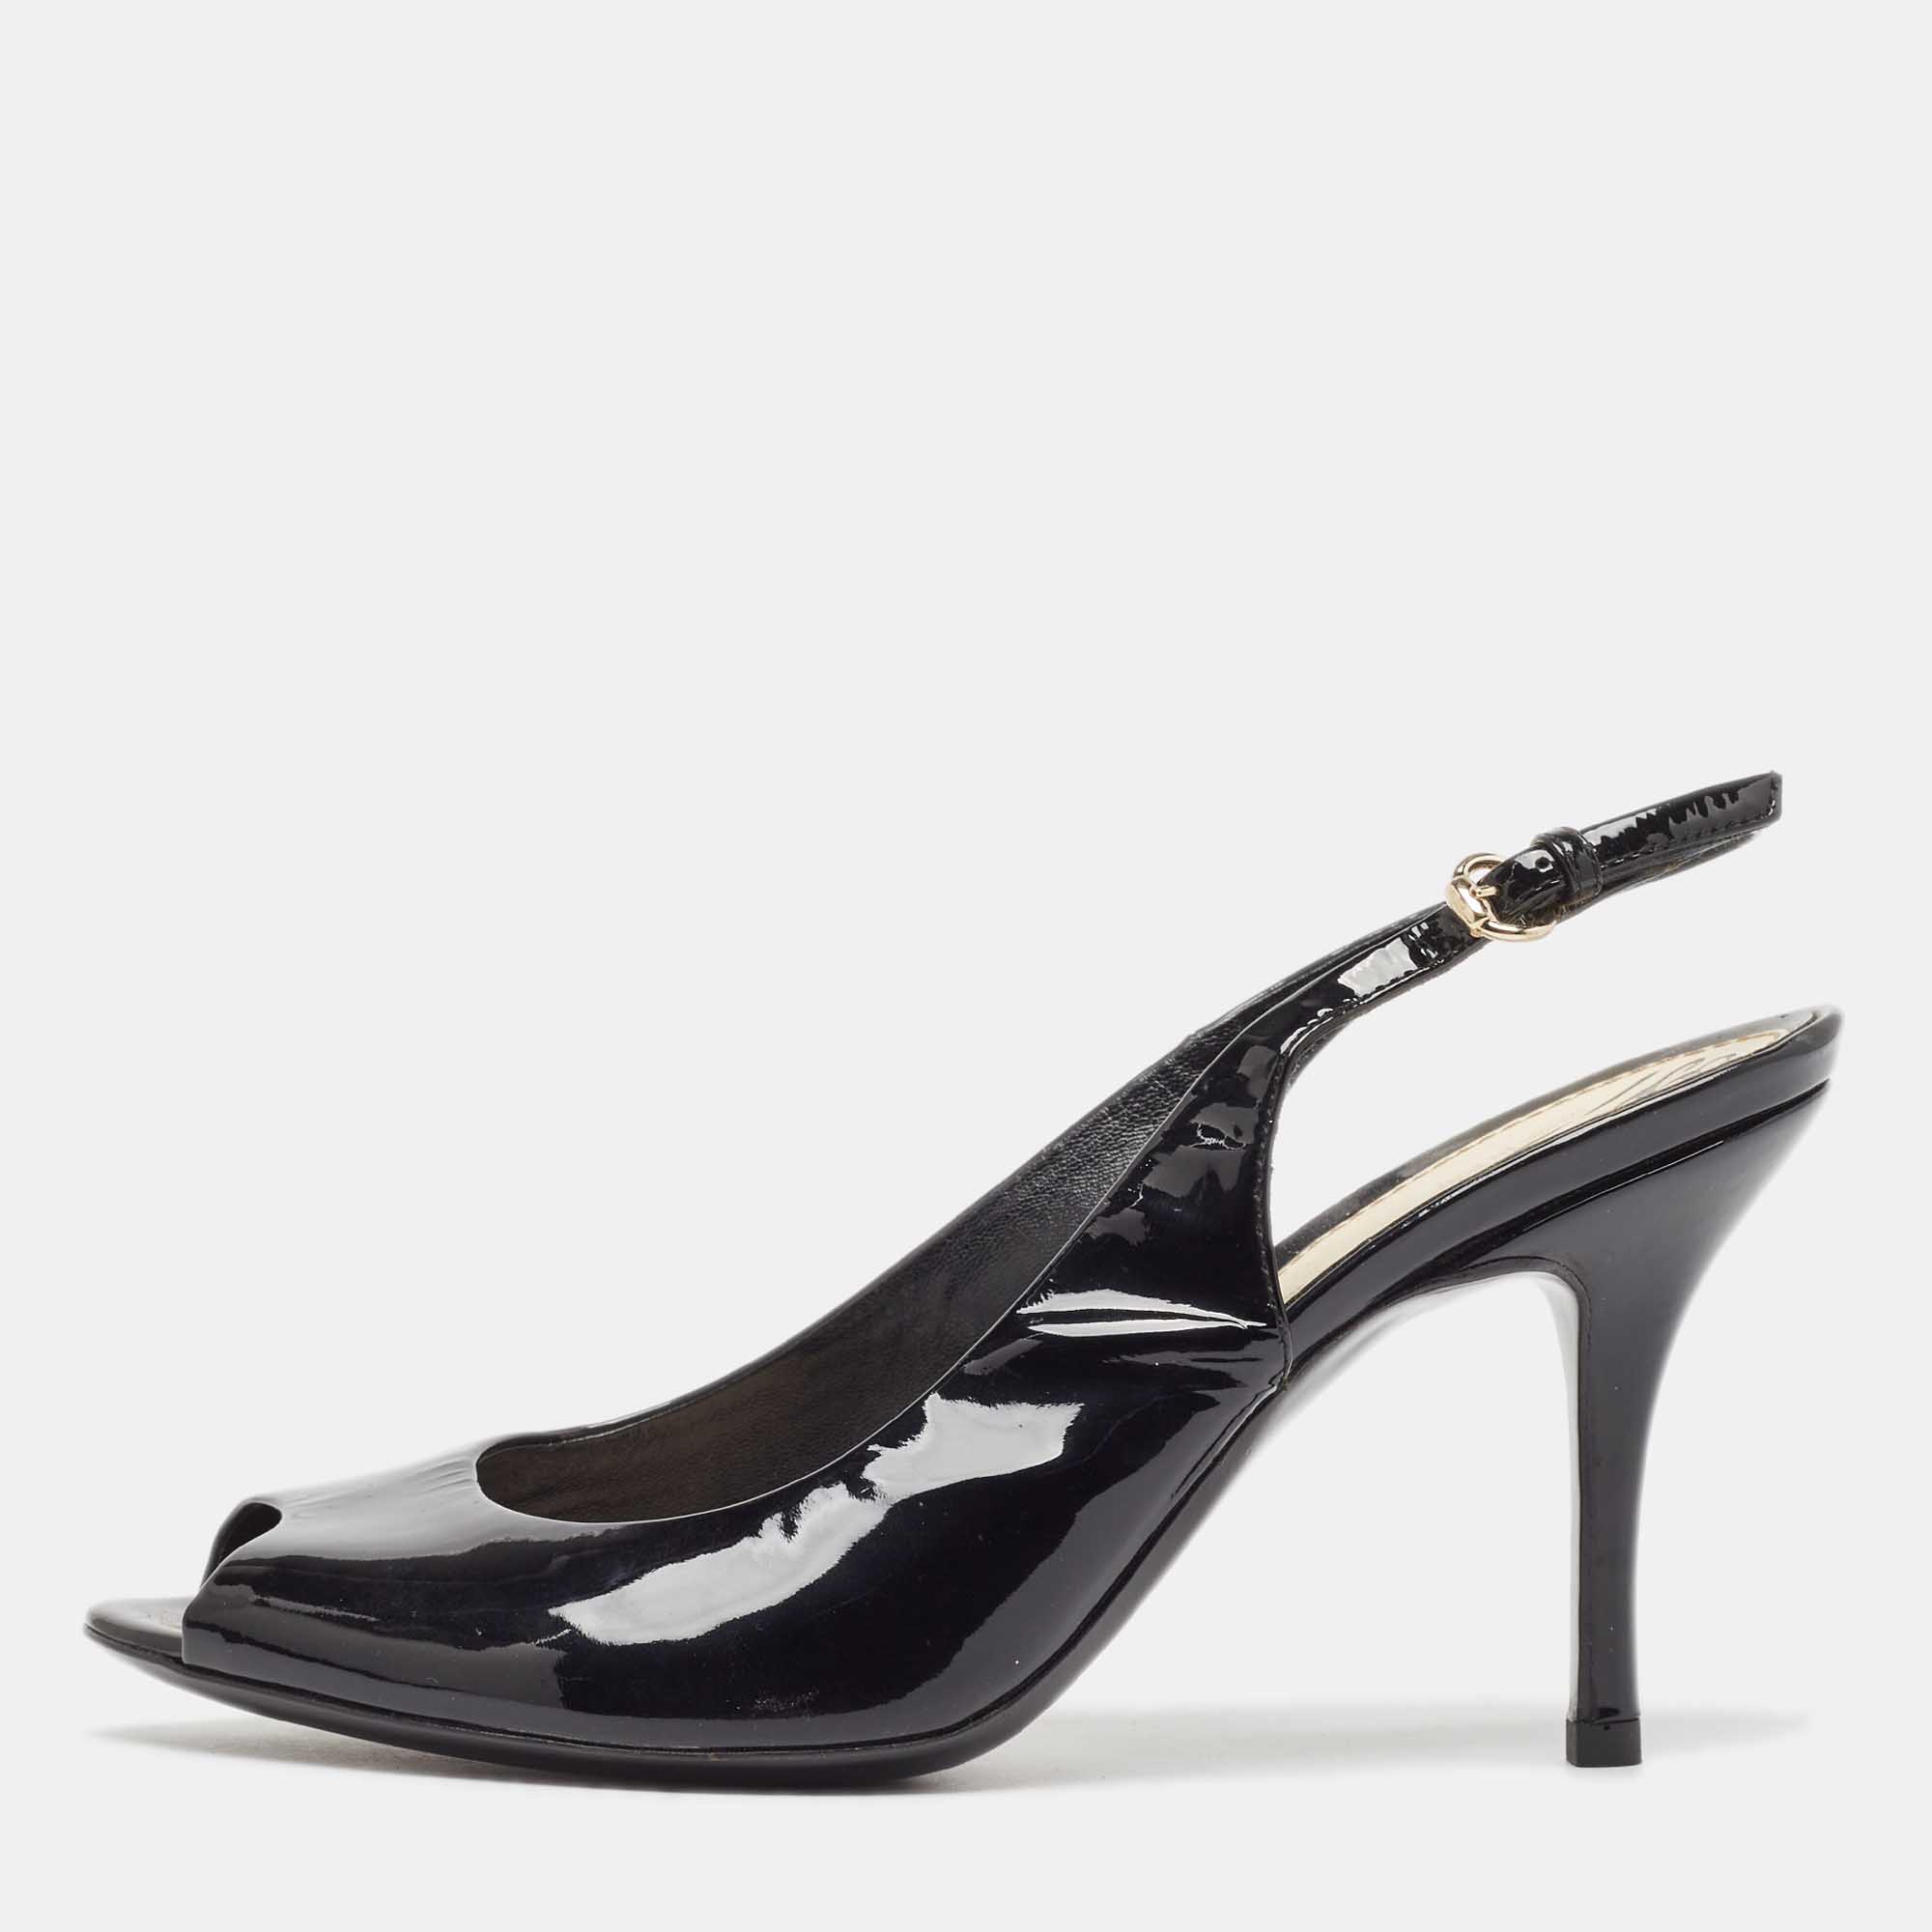 Gucci black patent peep toe slingback pumps size 36.5